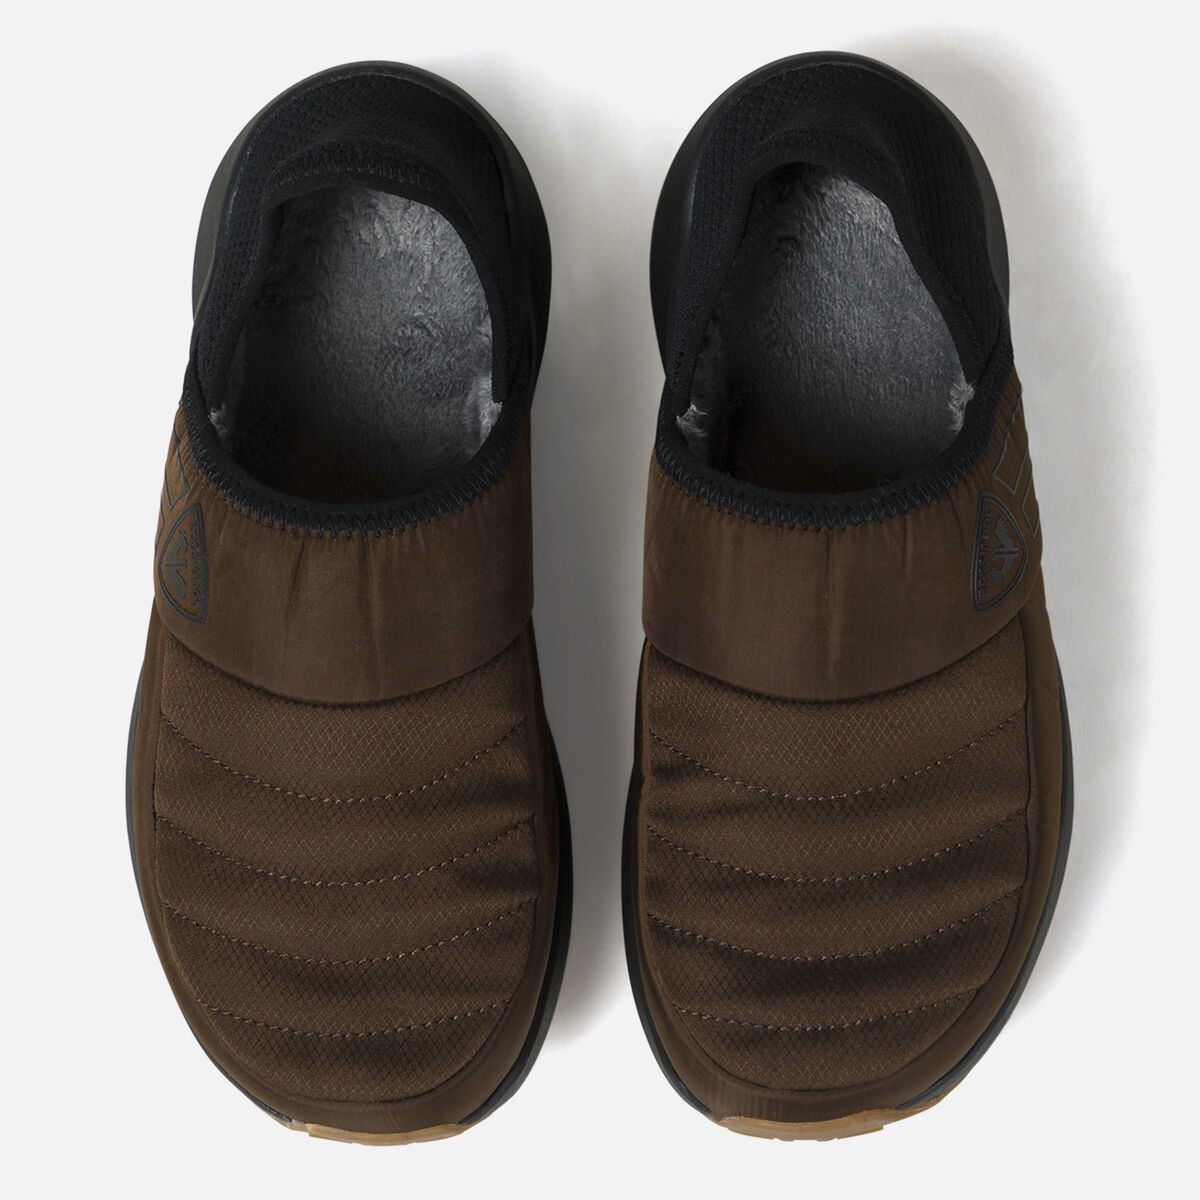 Rossignol Women's Chalet Shoes brown